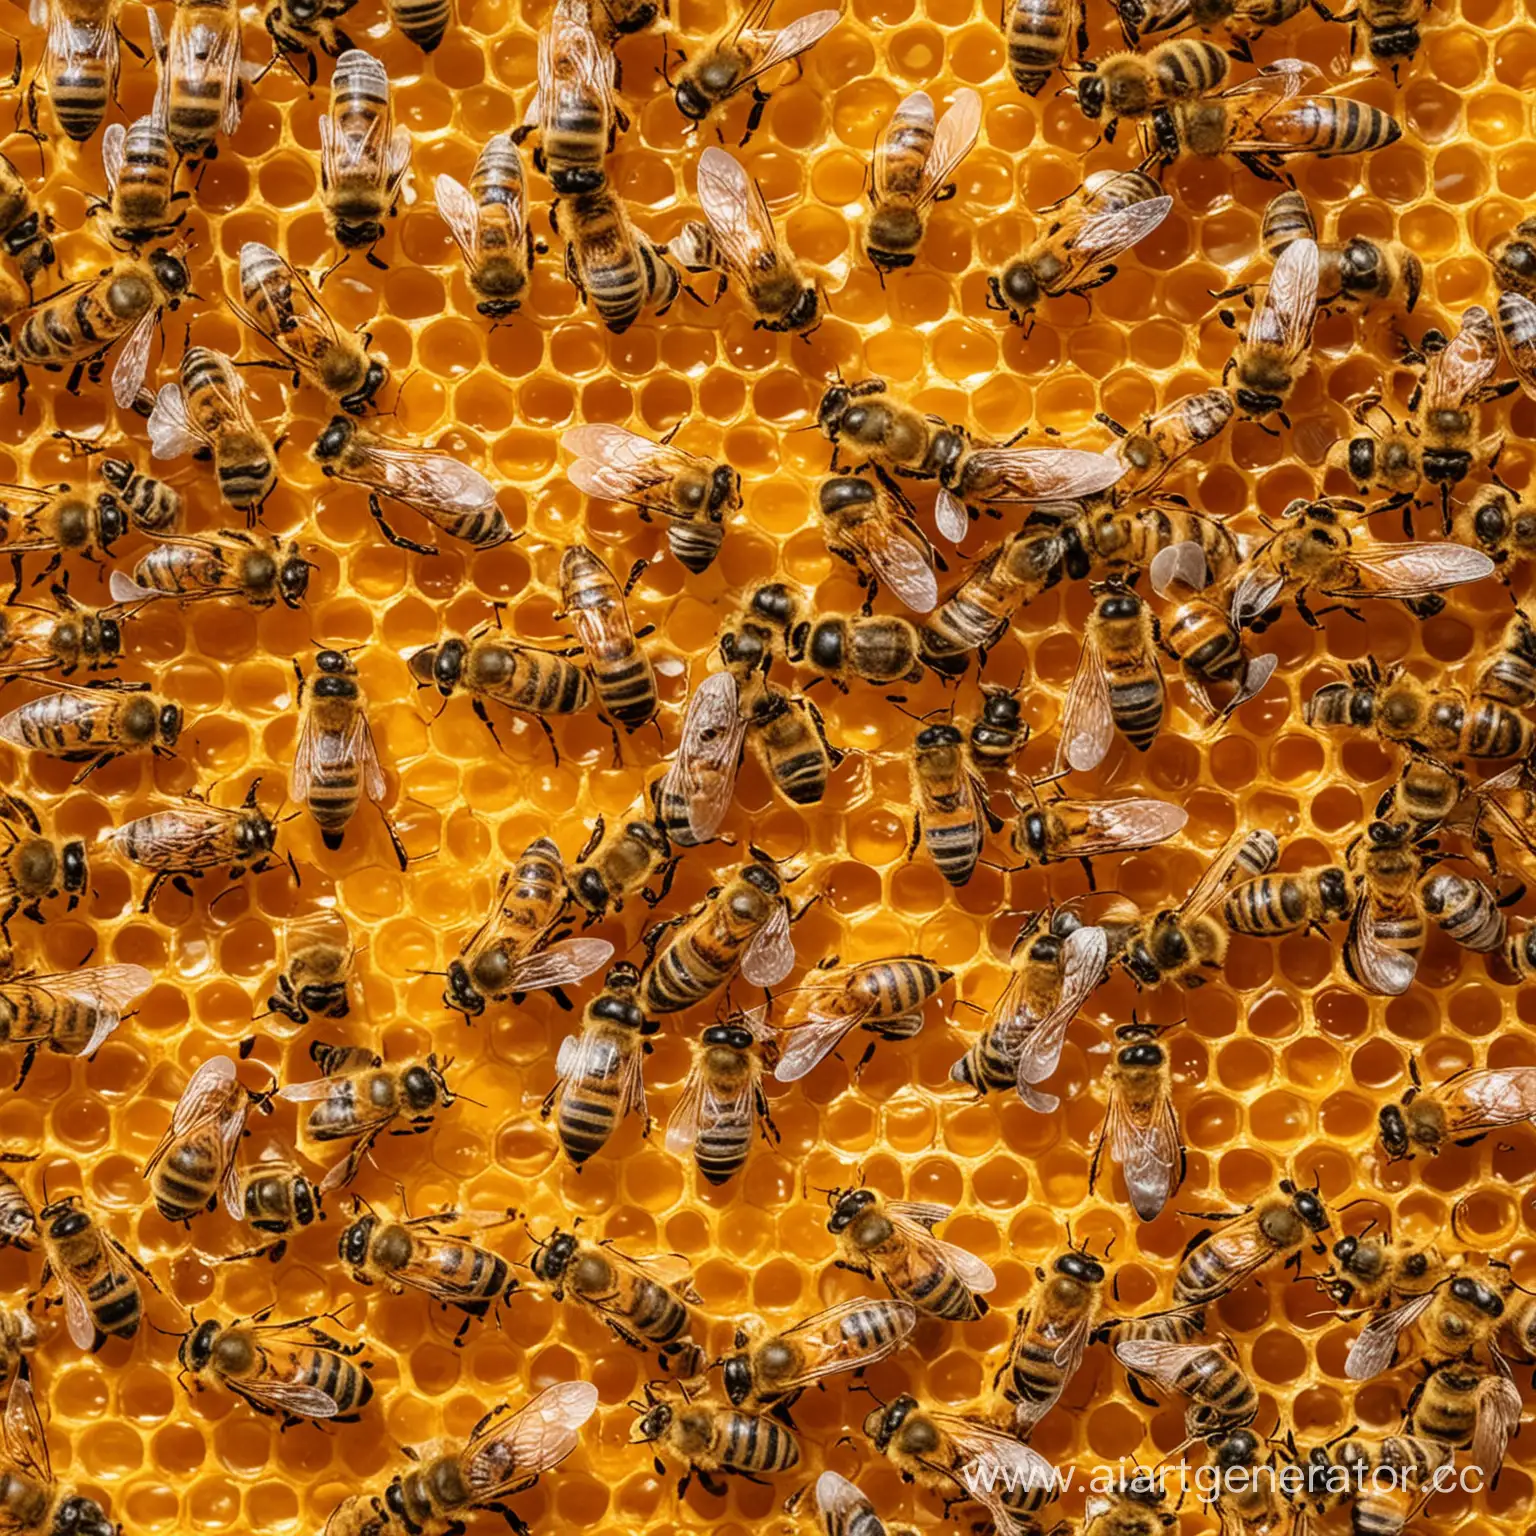 Sunny-Breeze-Bees-Flocking-to-Golden-Honeycombs